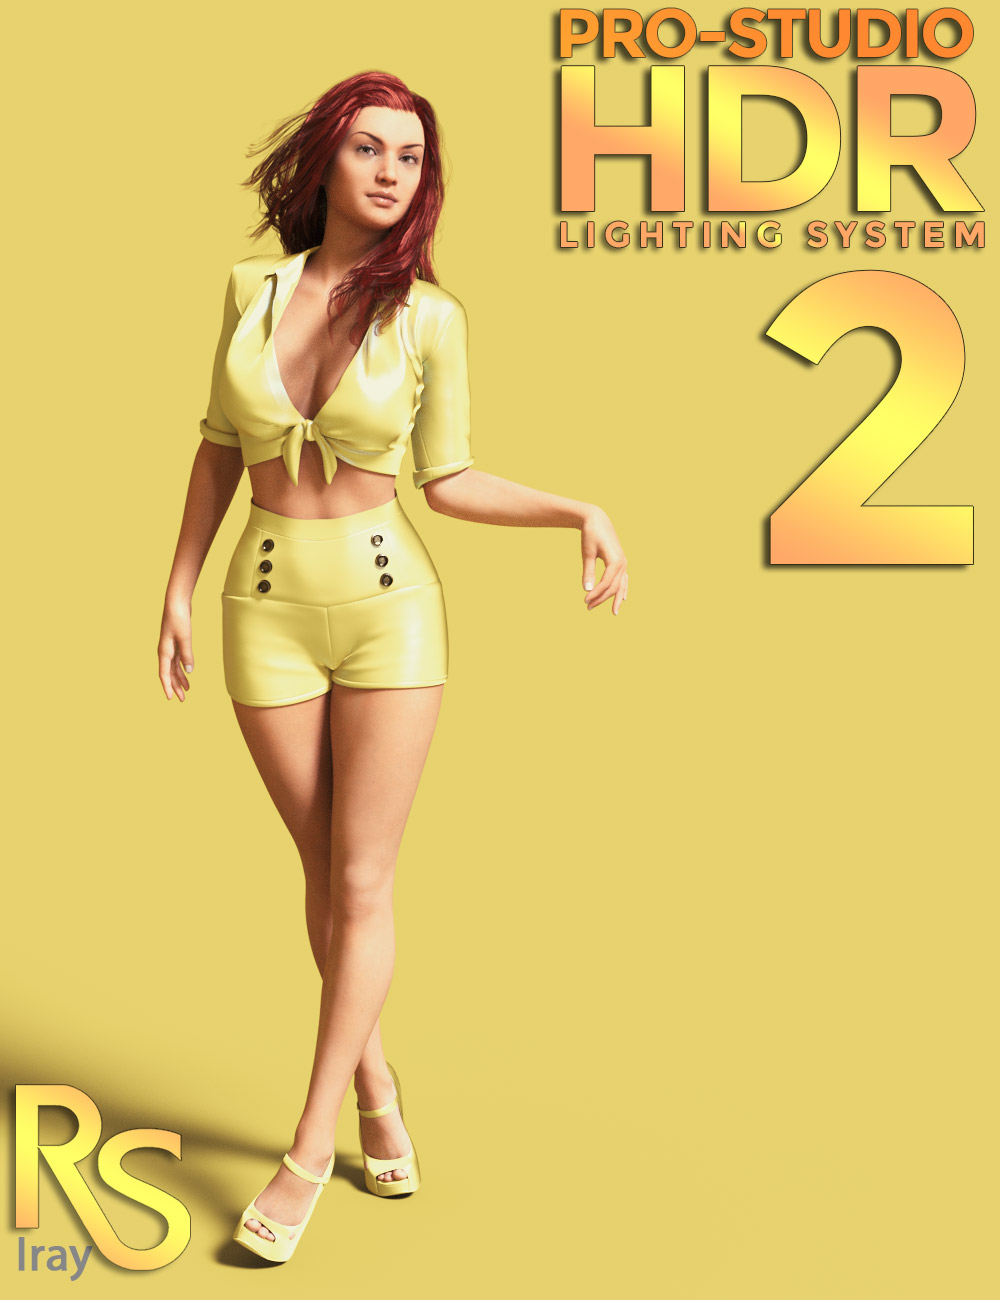 PRO-Studio HDR Lighting System 2 by: Colm Jackson, 3D Models by Daz 3D